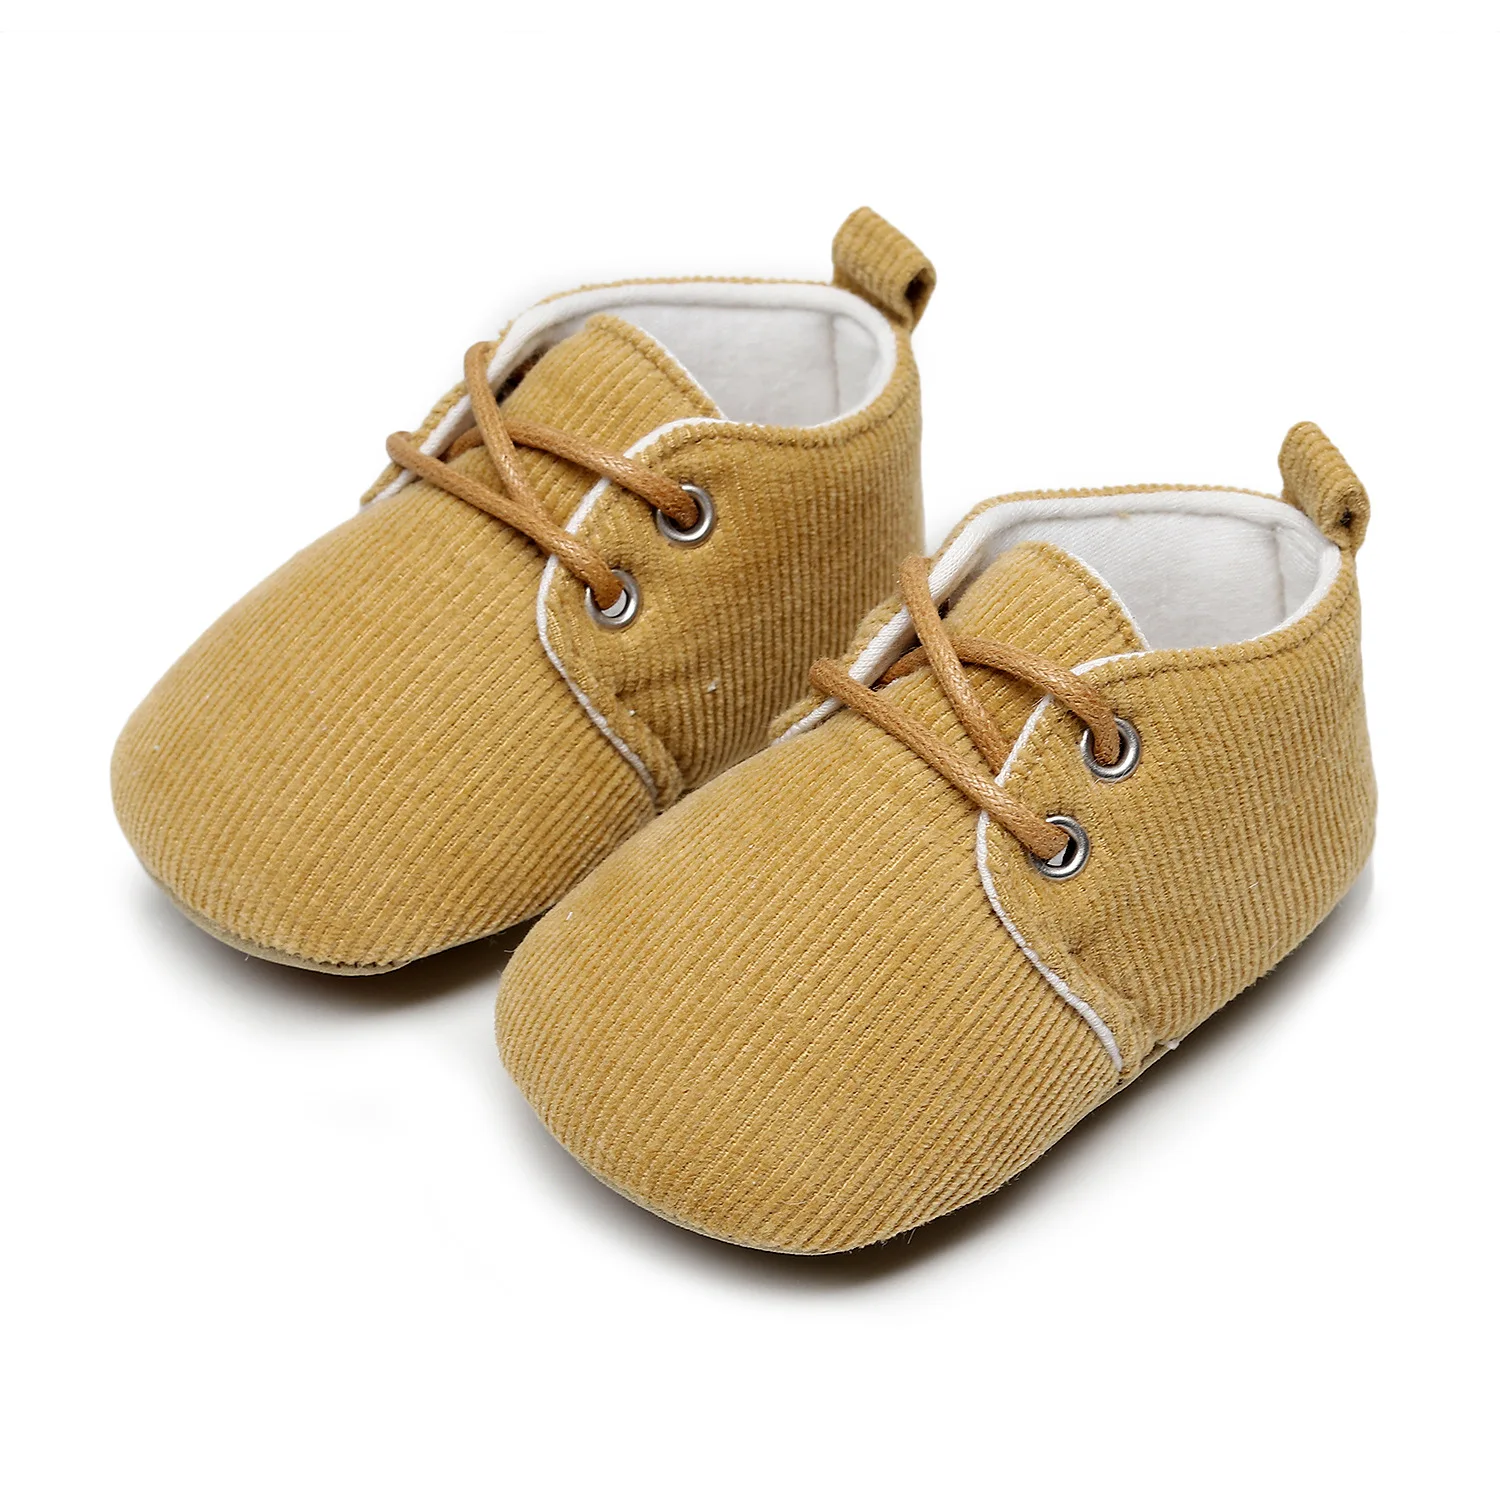 UK New Infant Toddler Baby Boy Girl Soft Sole Crib Shoes Sneaker Newborn 